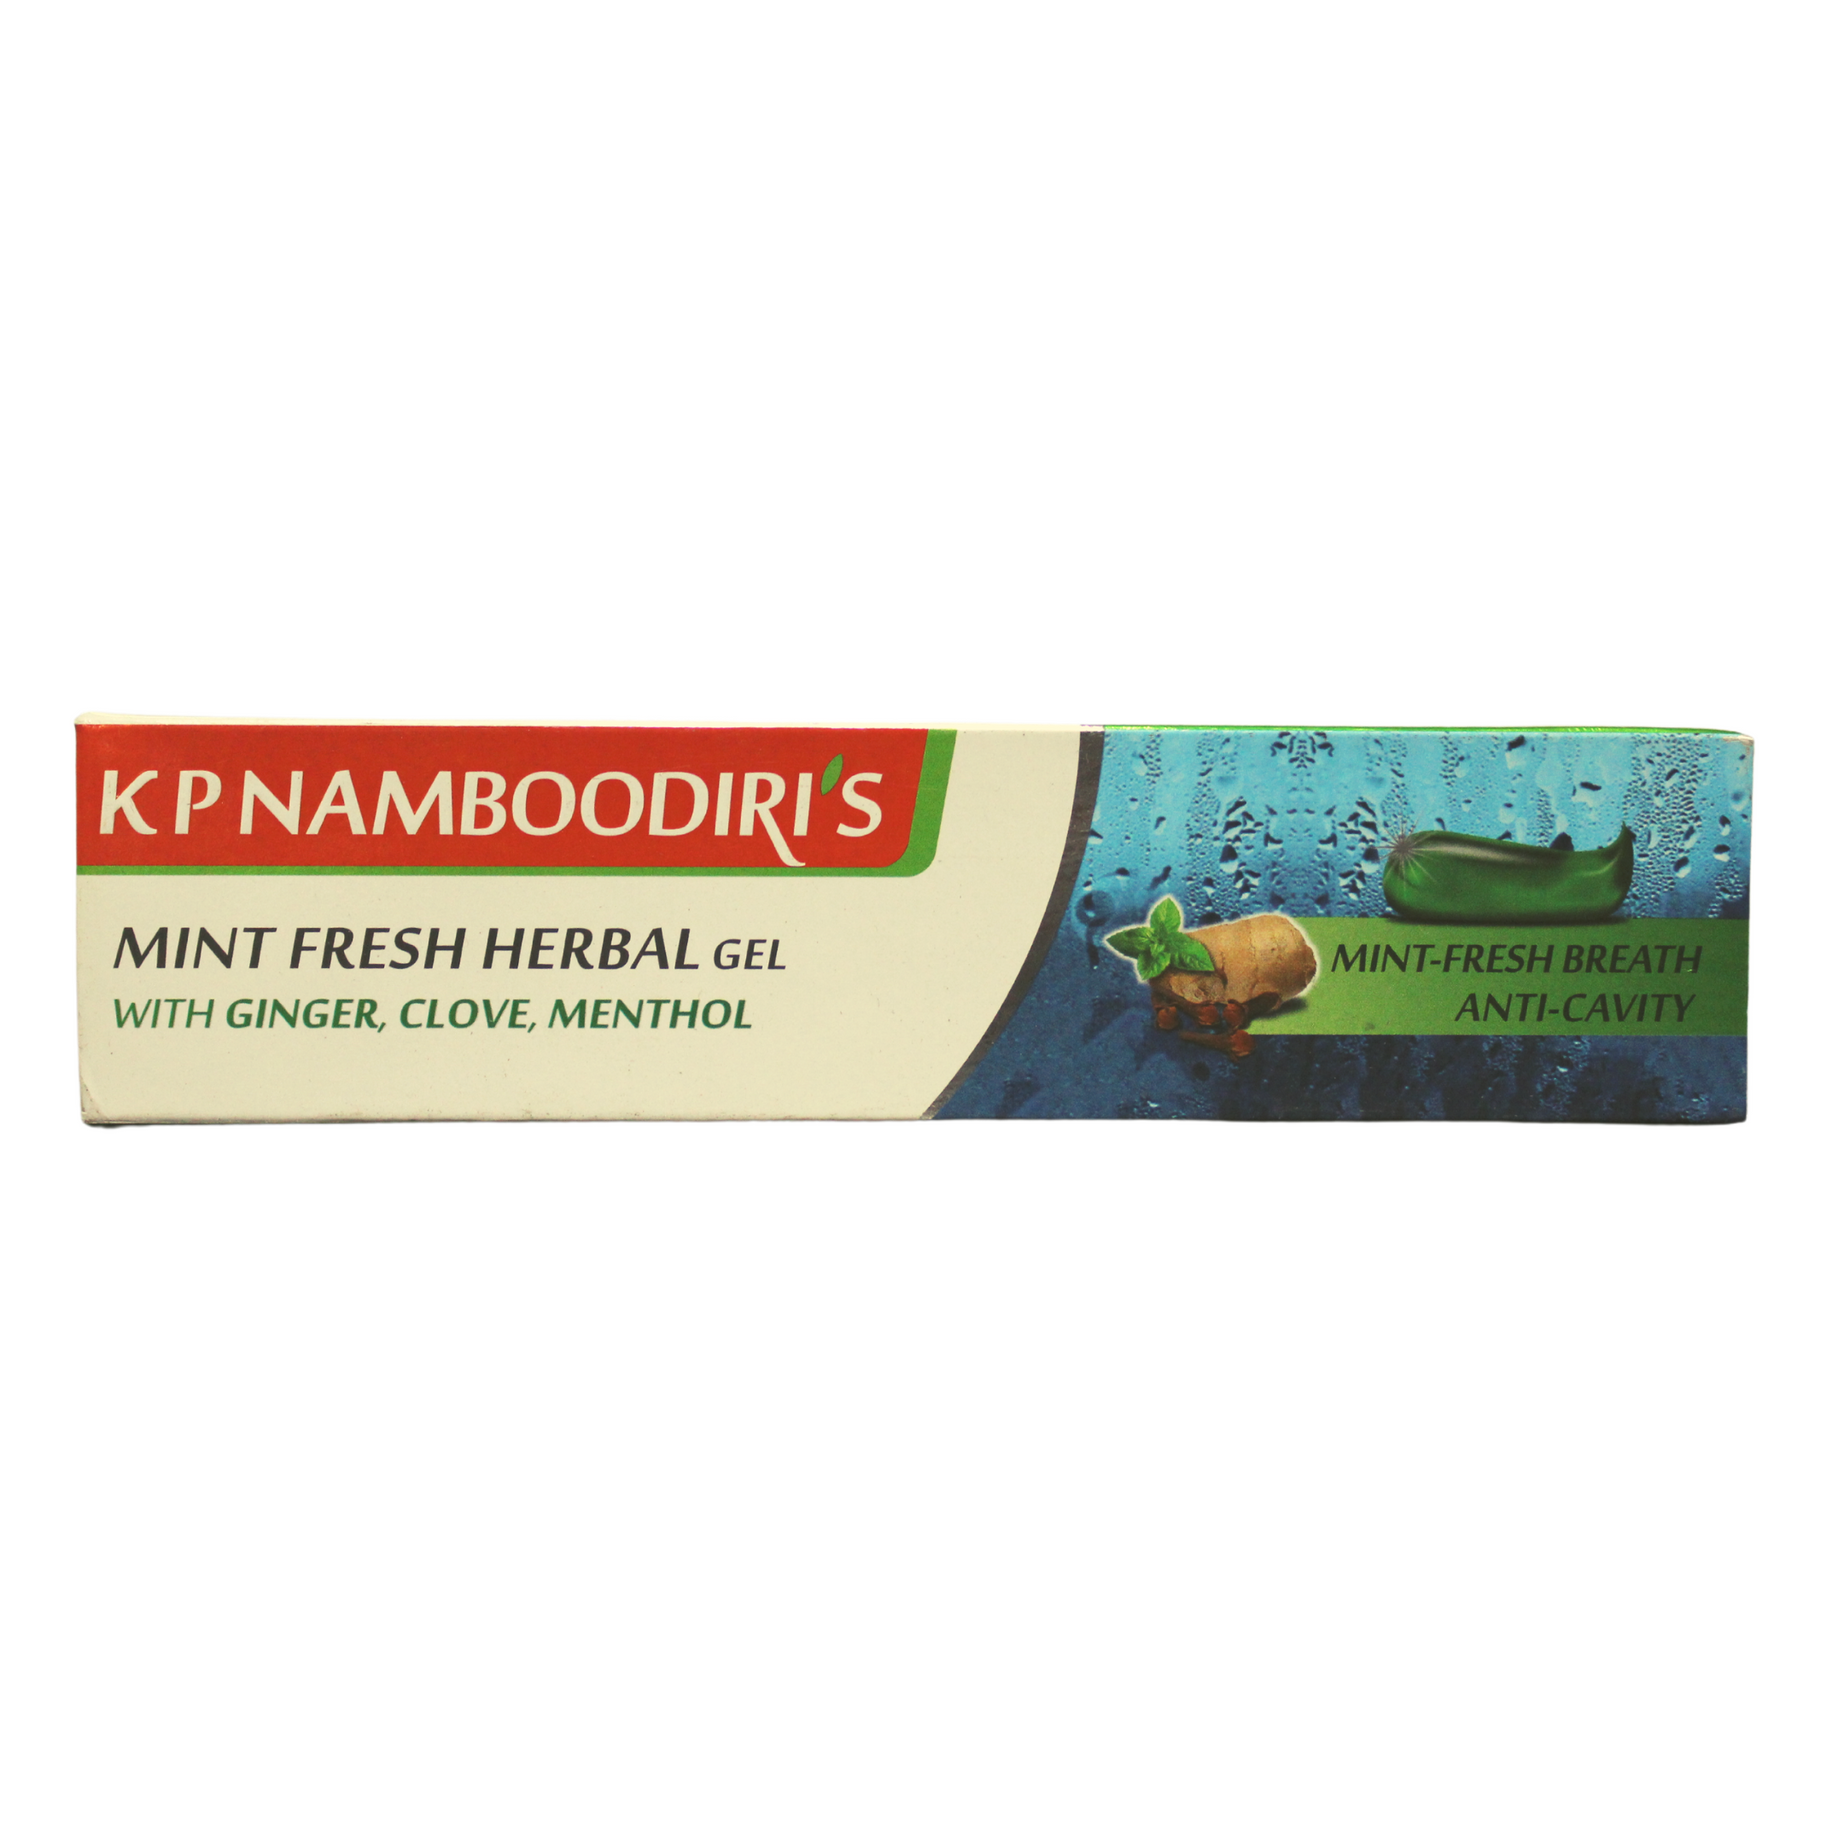 Shop KP Namboodiri's Mint Fresh Herbal Gel Toothpaste 150gm at price 90.00 from KP Namboodiri Online - Ayush Care